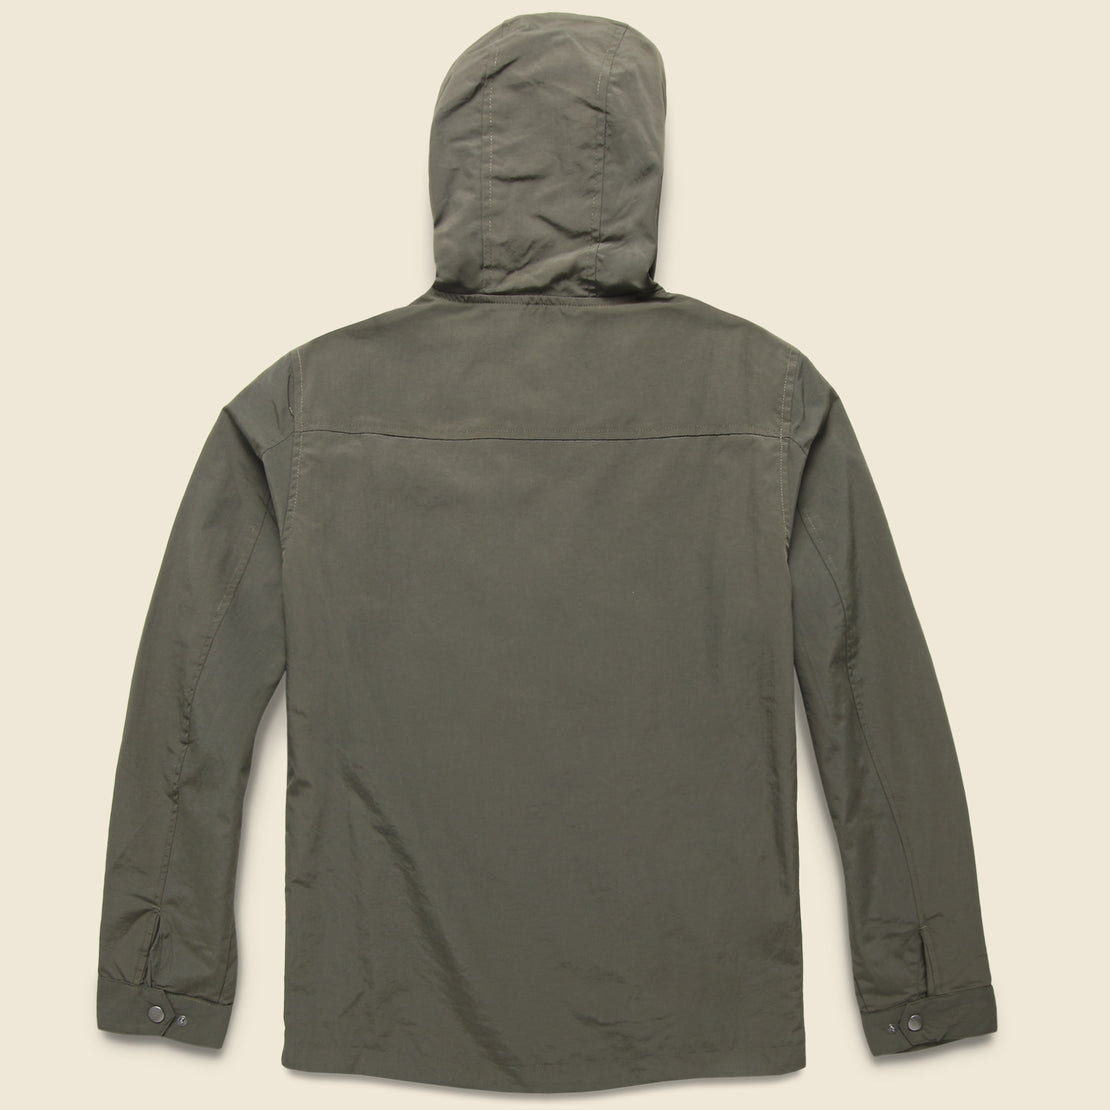 Marshall Jacket - Charcoal - Bridge & Burn - STAG Provisions - Outerwear - Coat / Jacket